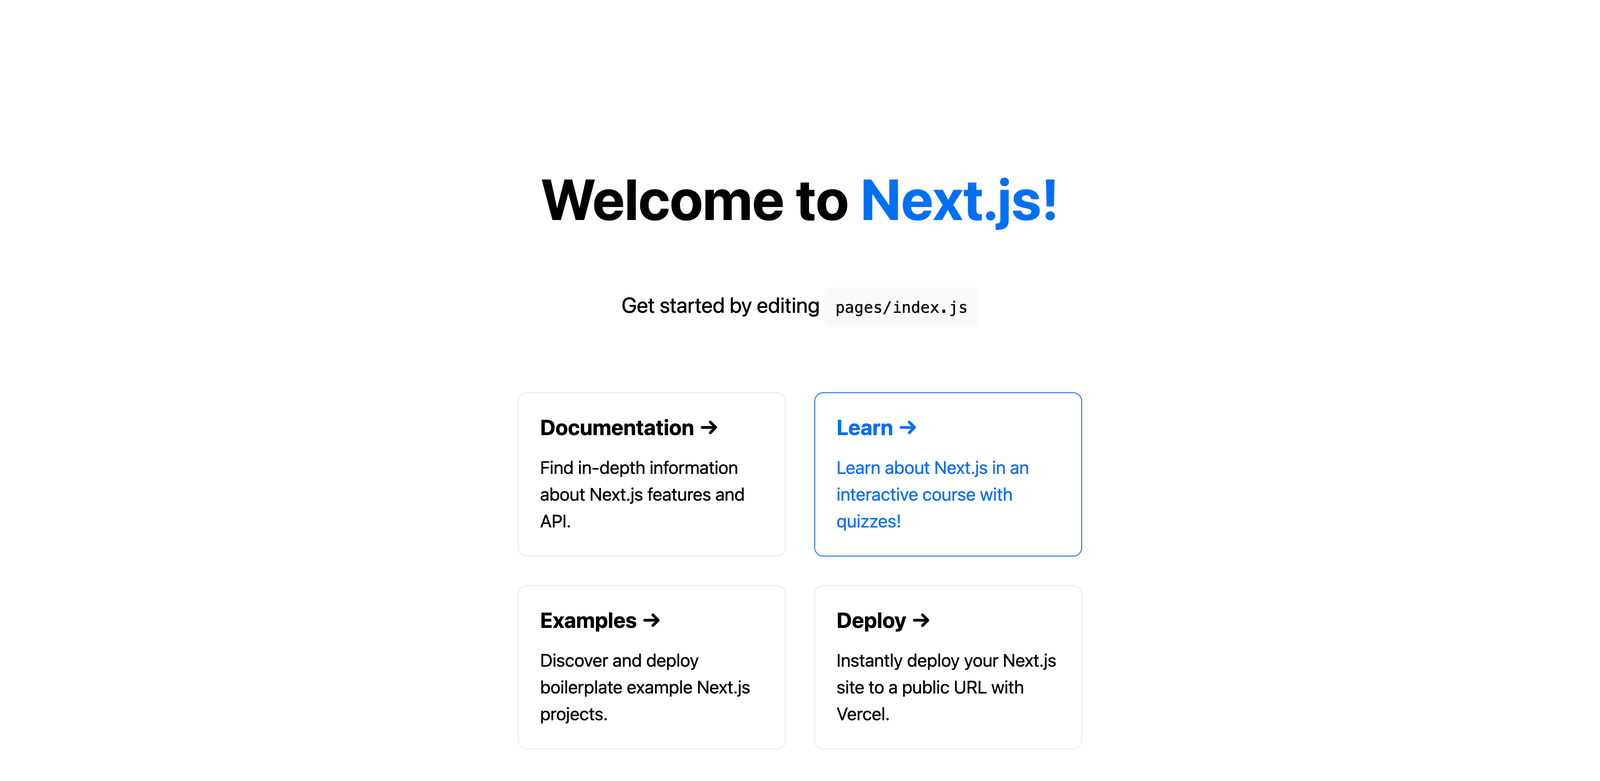 Next.js homepage